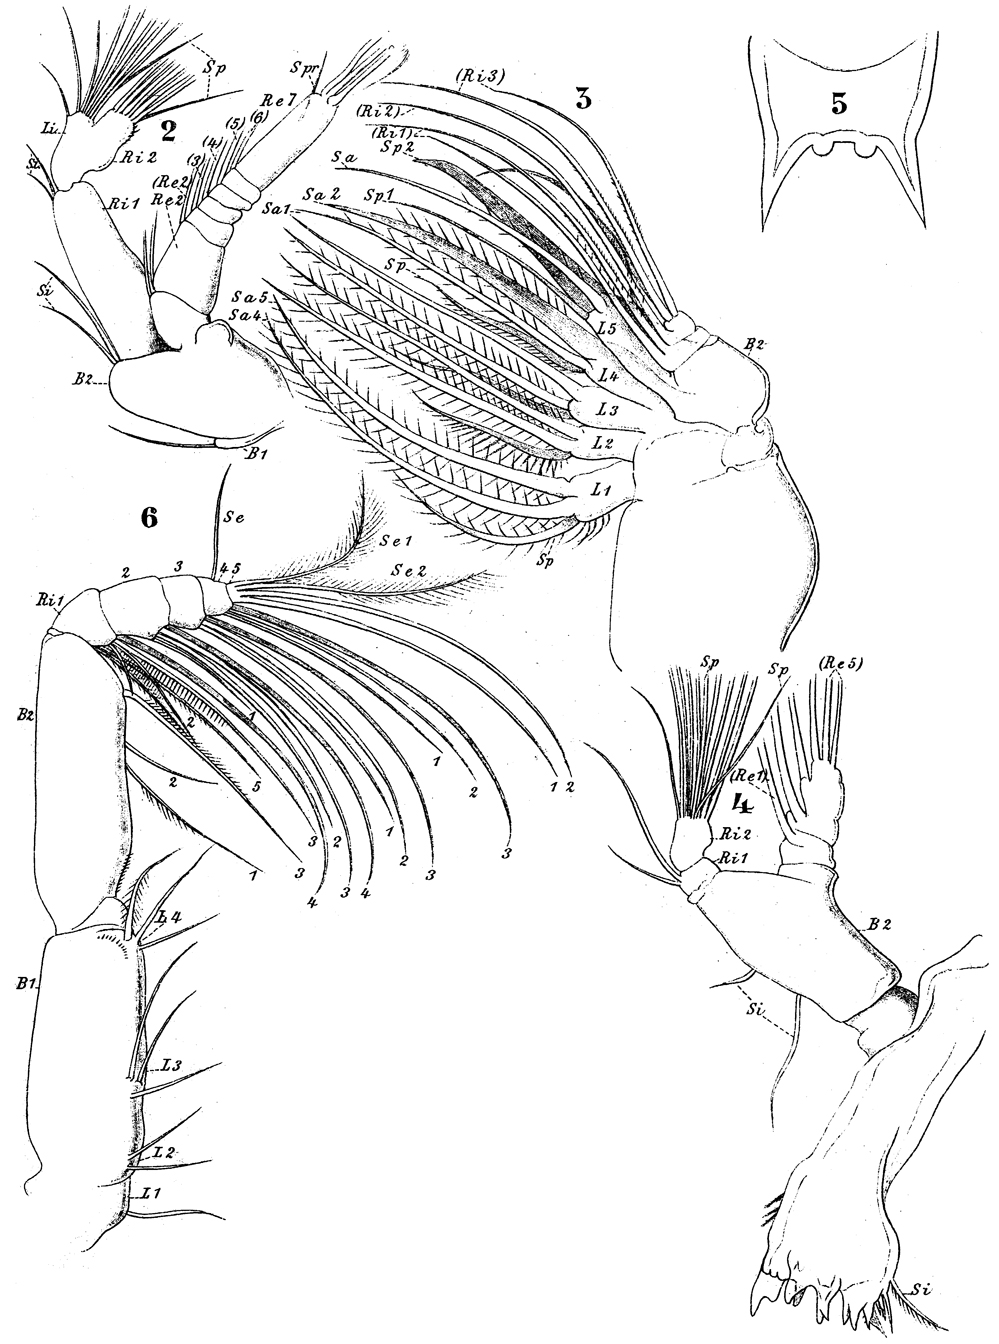 Species Aetideus giesbrechti - Plate 17 of morphological figures